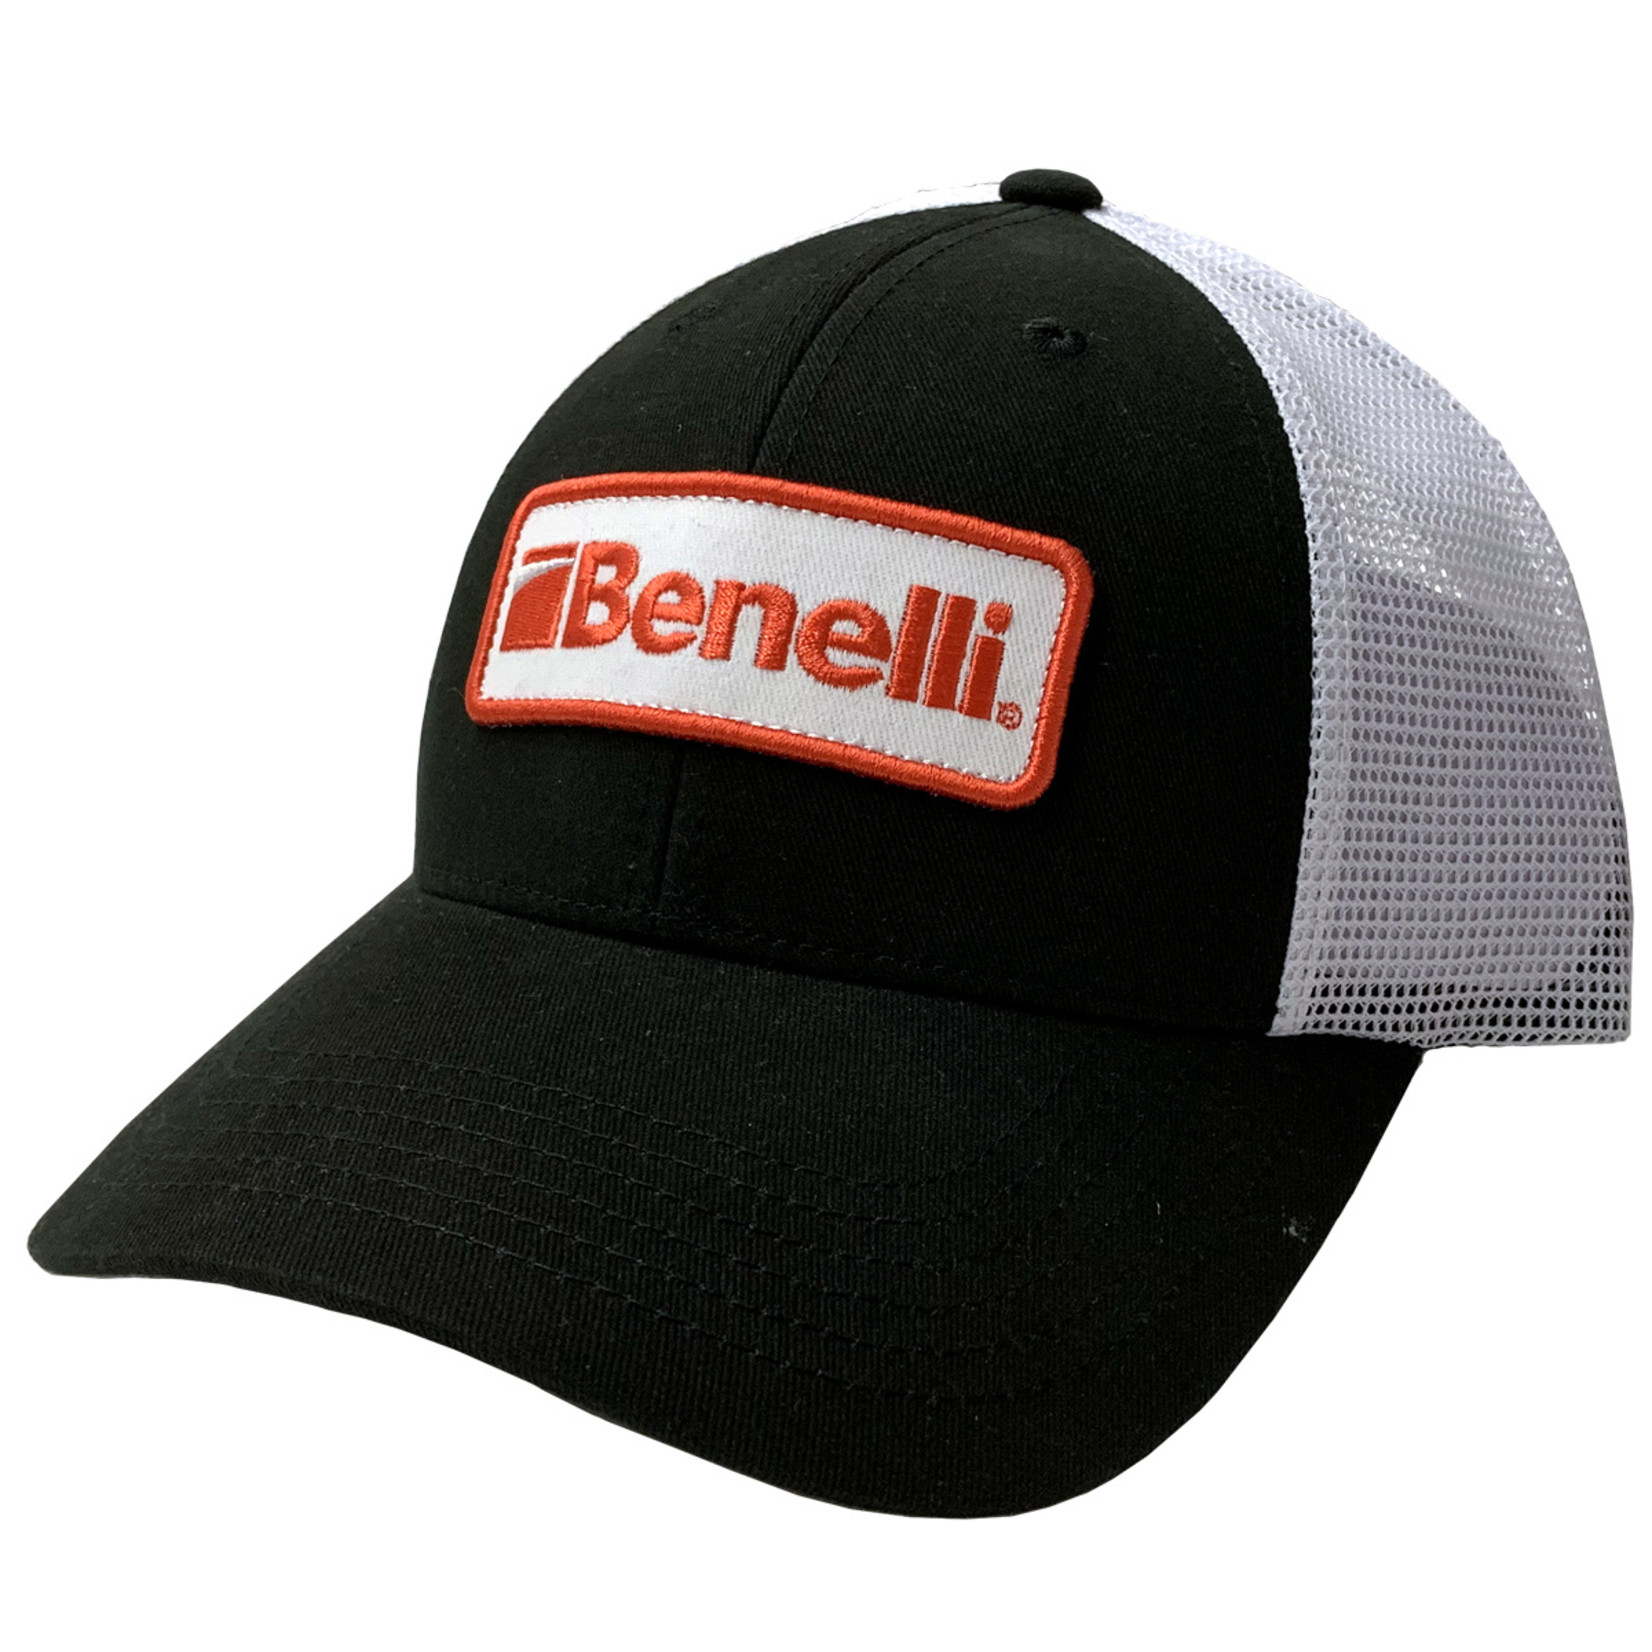 Beretta Benelli Trucker Hat - Black and white mesh